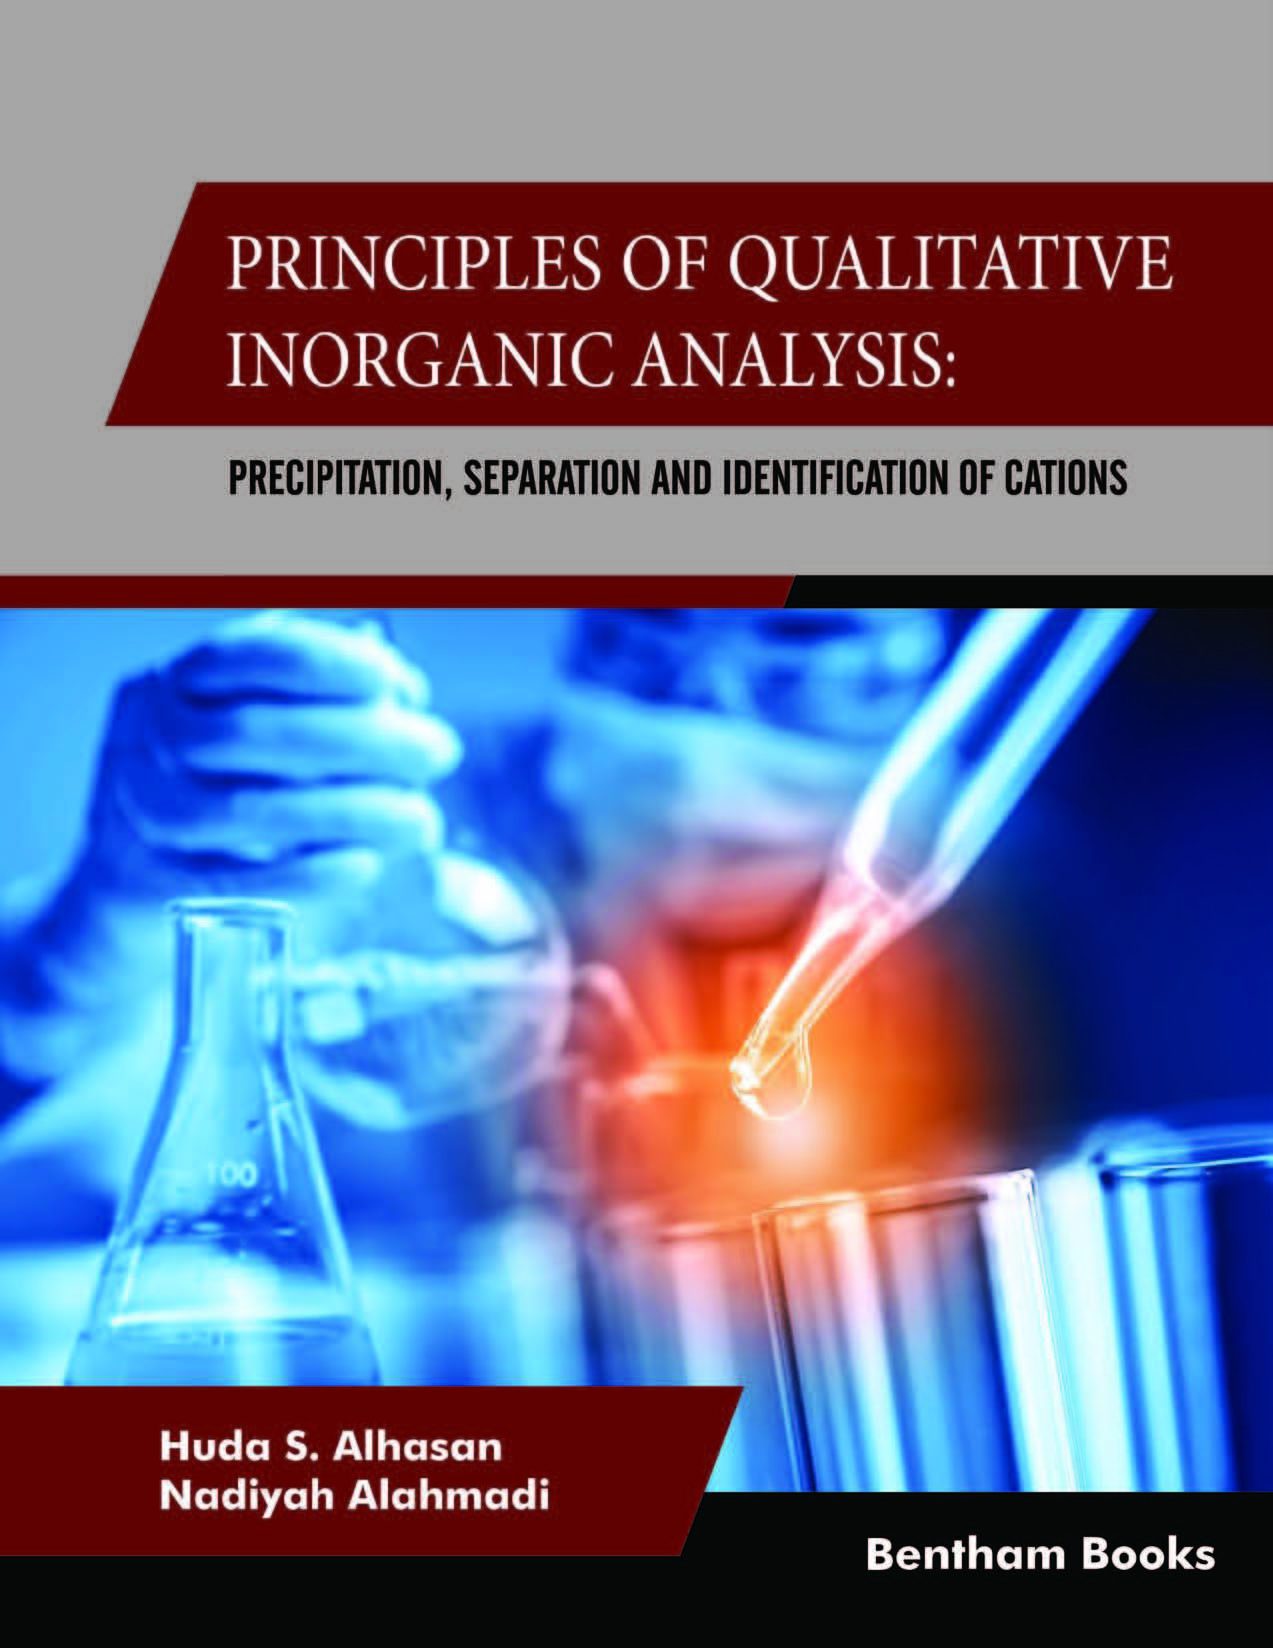 Principles of Qualitative Inorganic Analysis: Precipitation,Separation and Identification of Cations